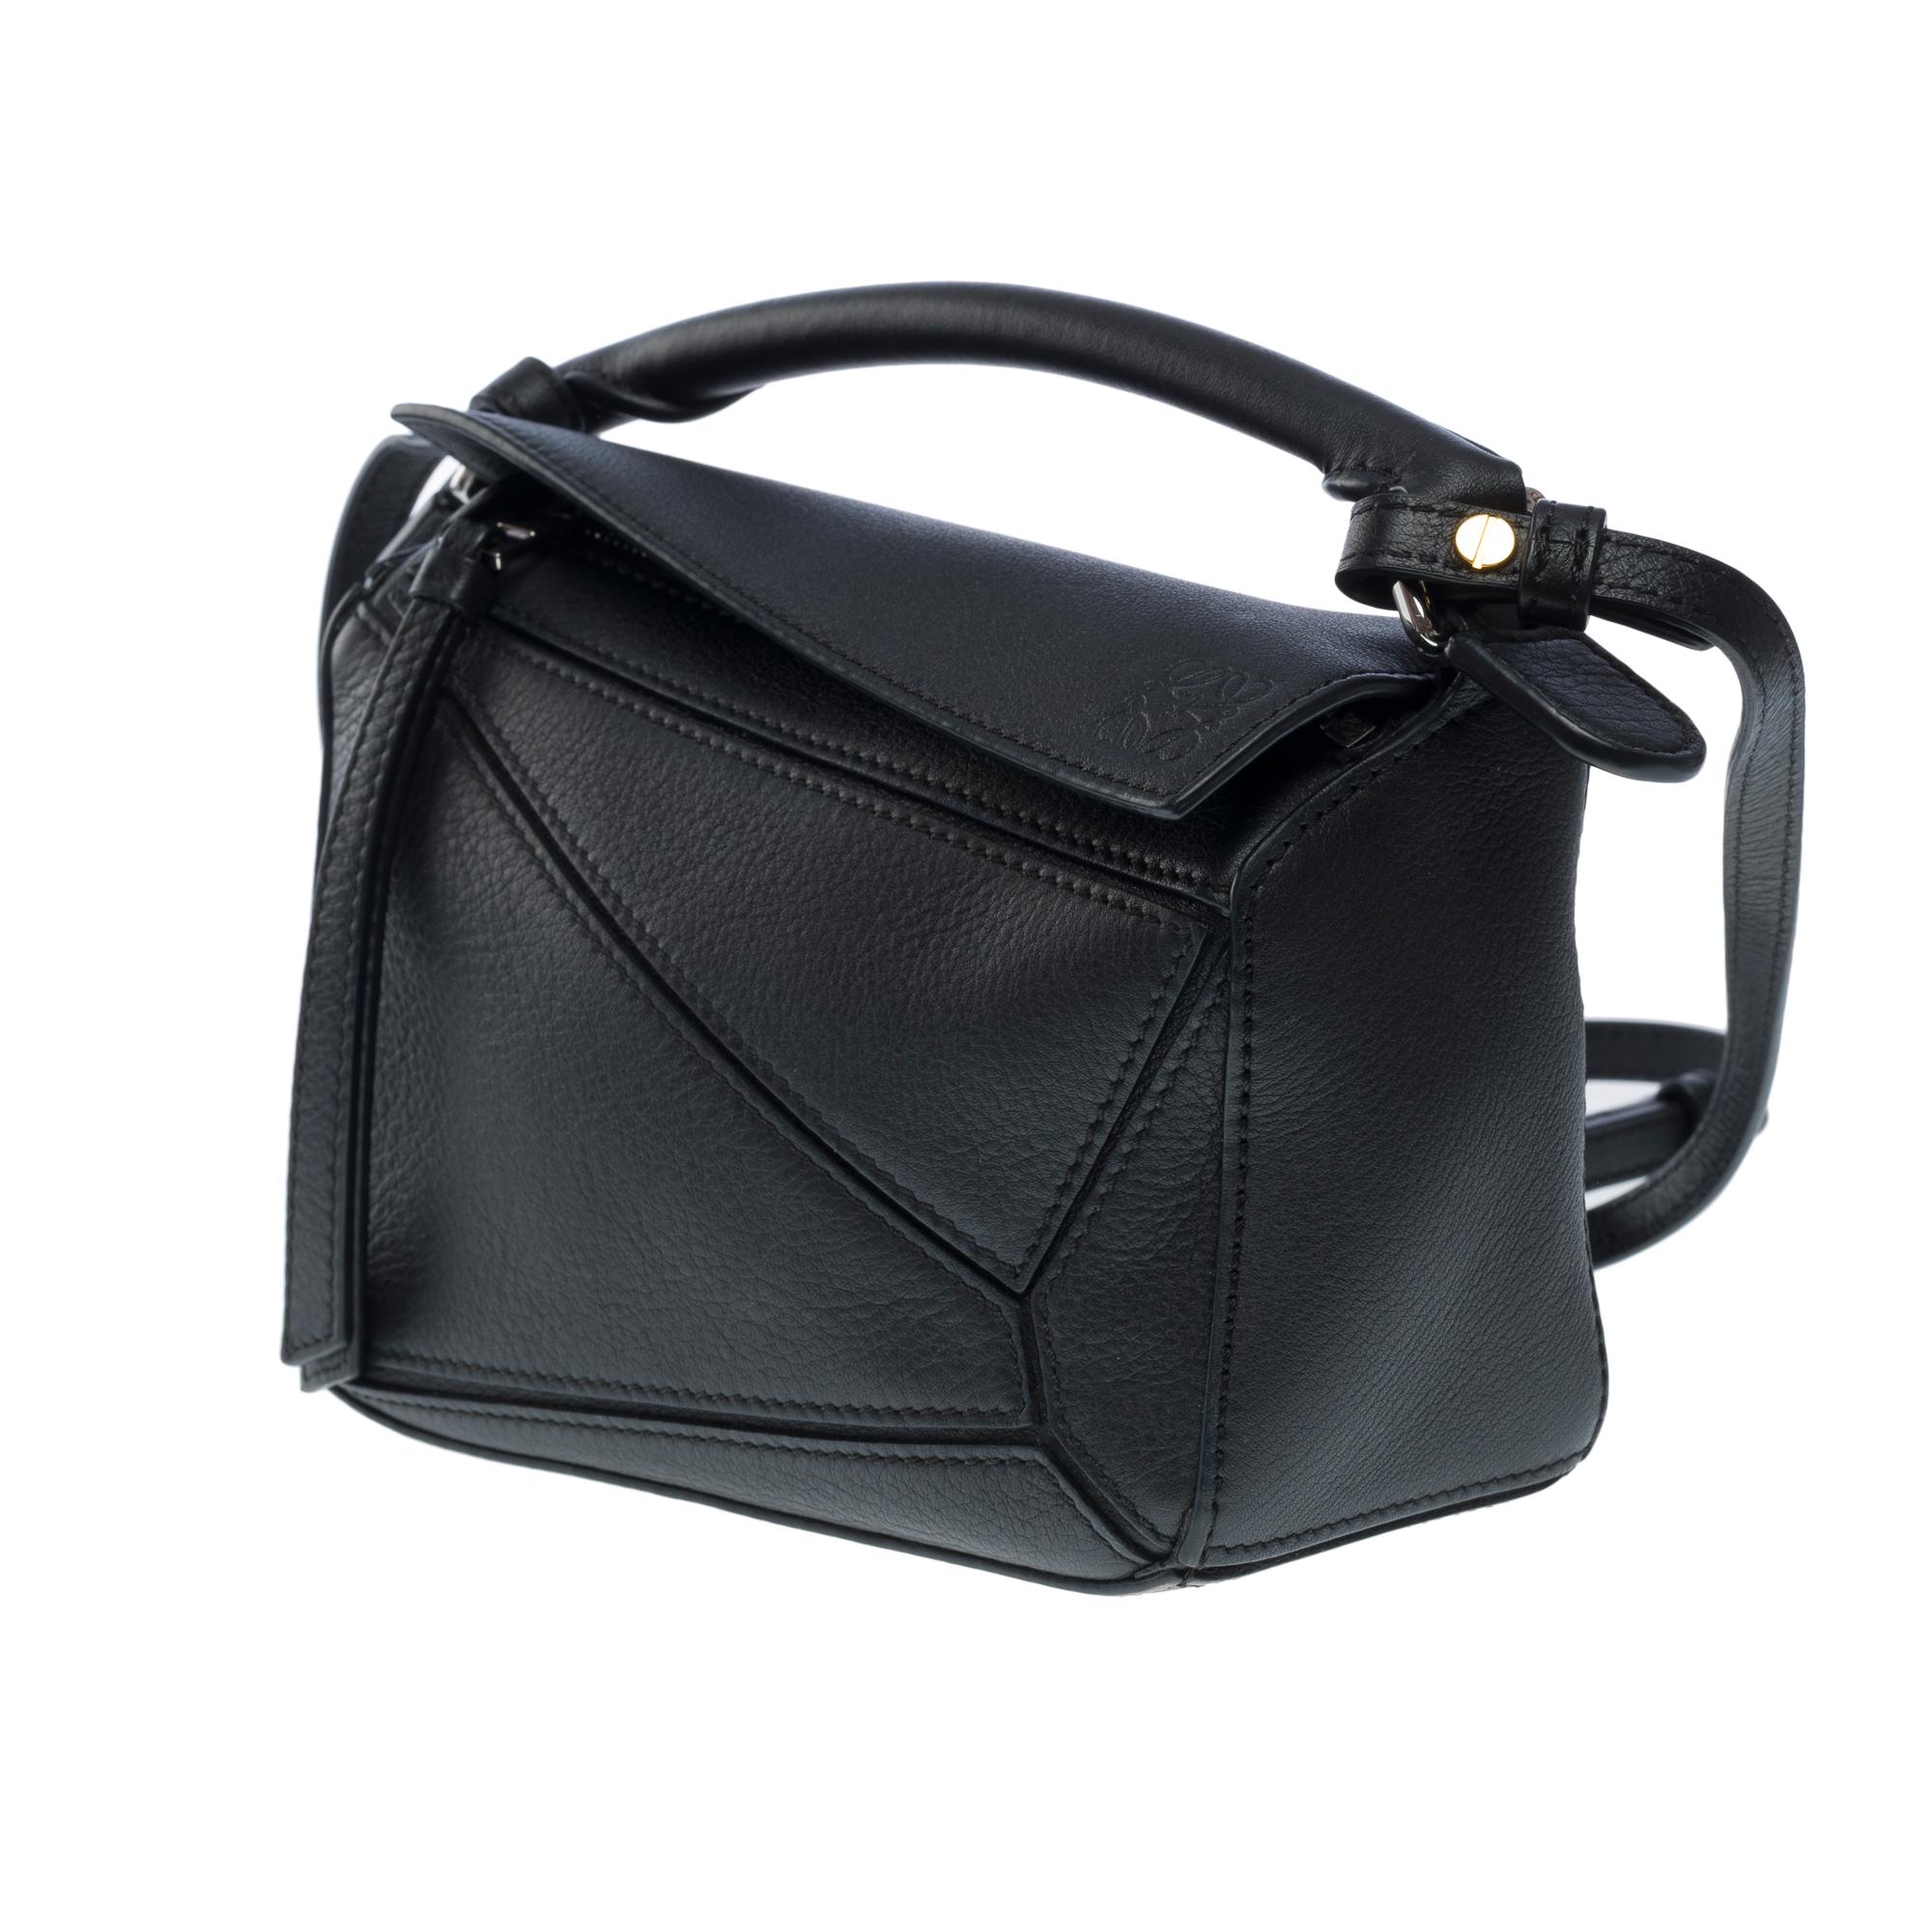 Women's Very Chic Loewe Puzzle Mini 2 WAY handbag in black leather, SHW